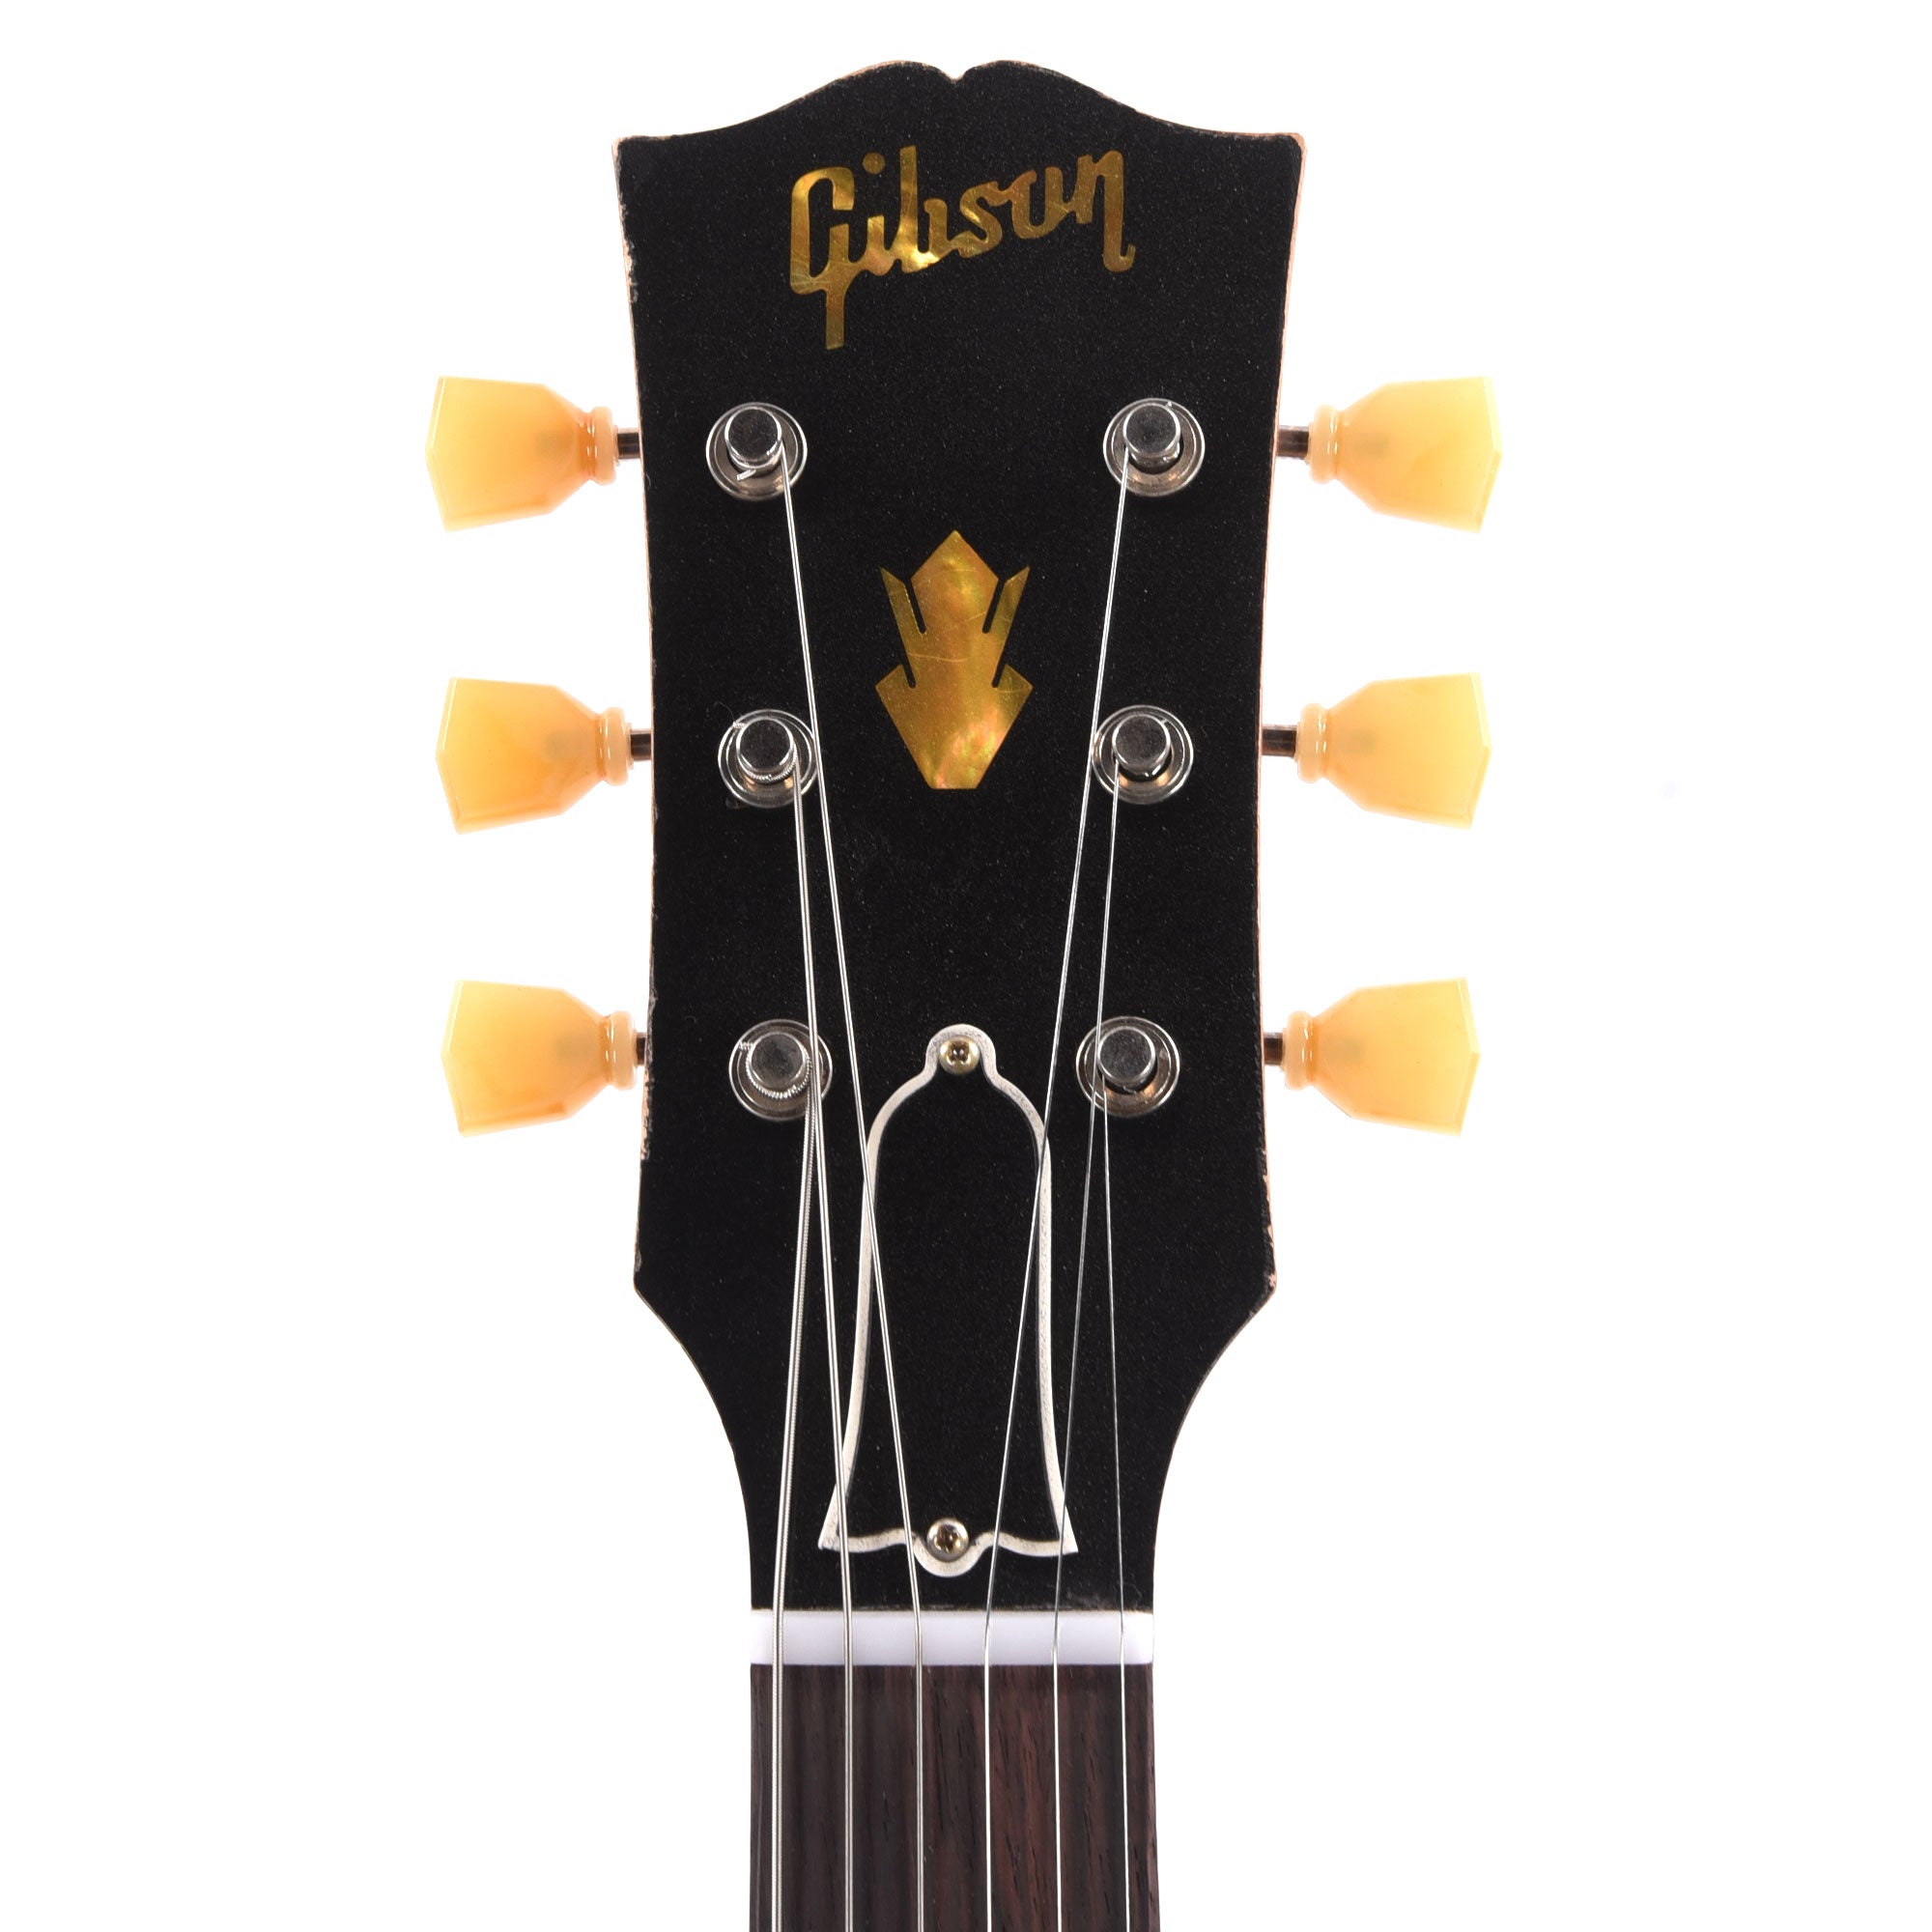 Gibson Custom Shop Limited Edition 1958 ES-335 Murphy Lab Heavy Aged Dirty Blonde